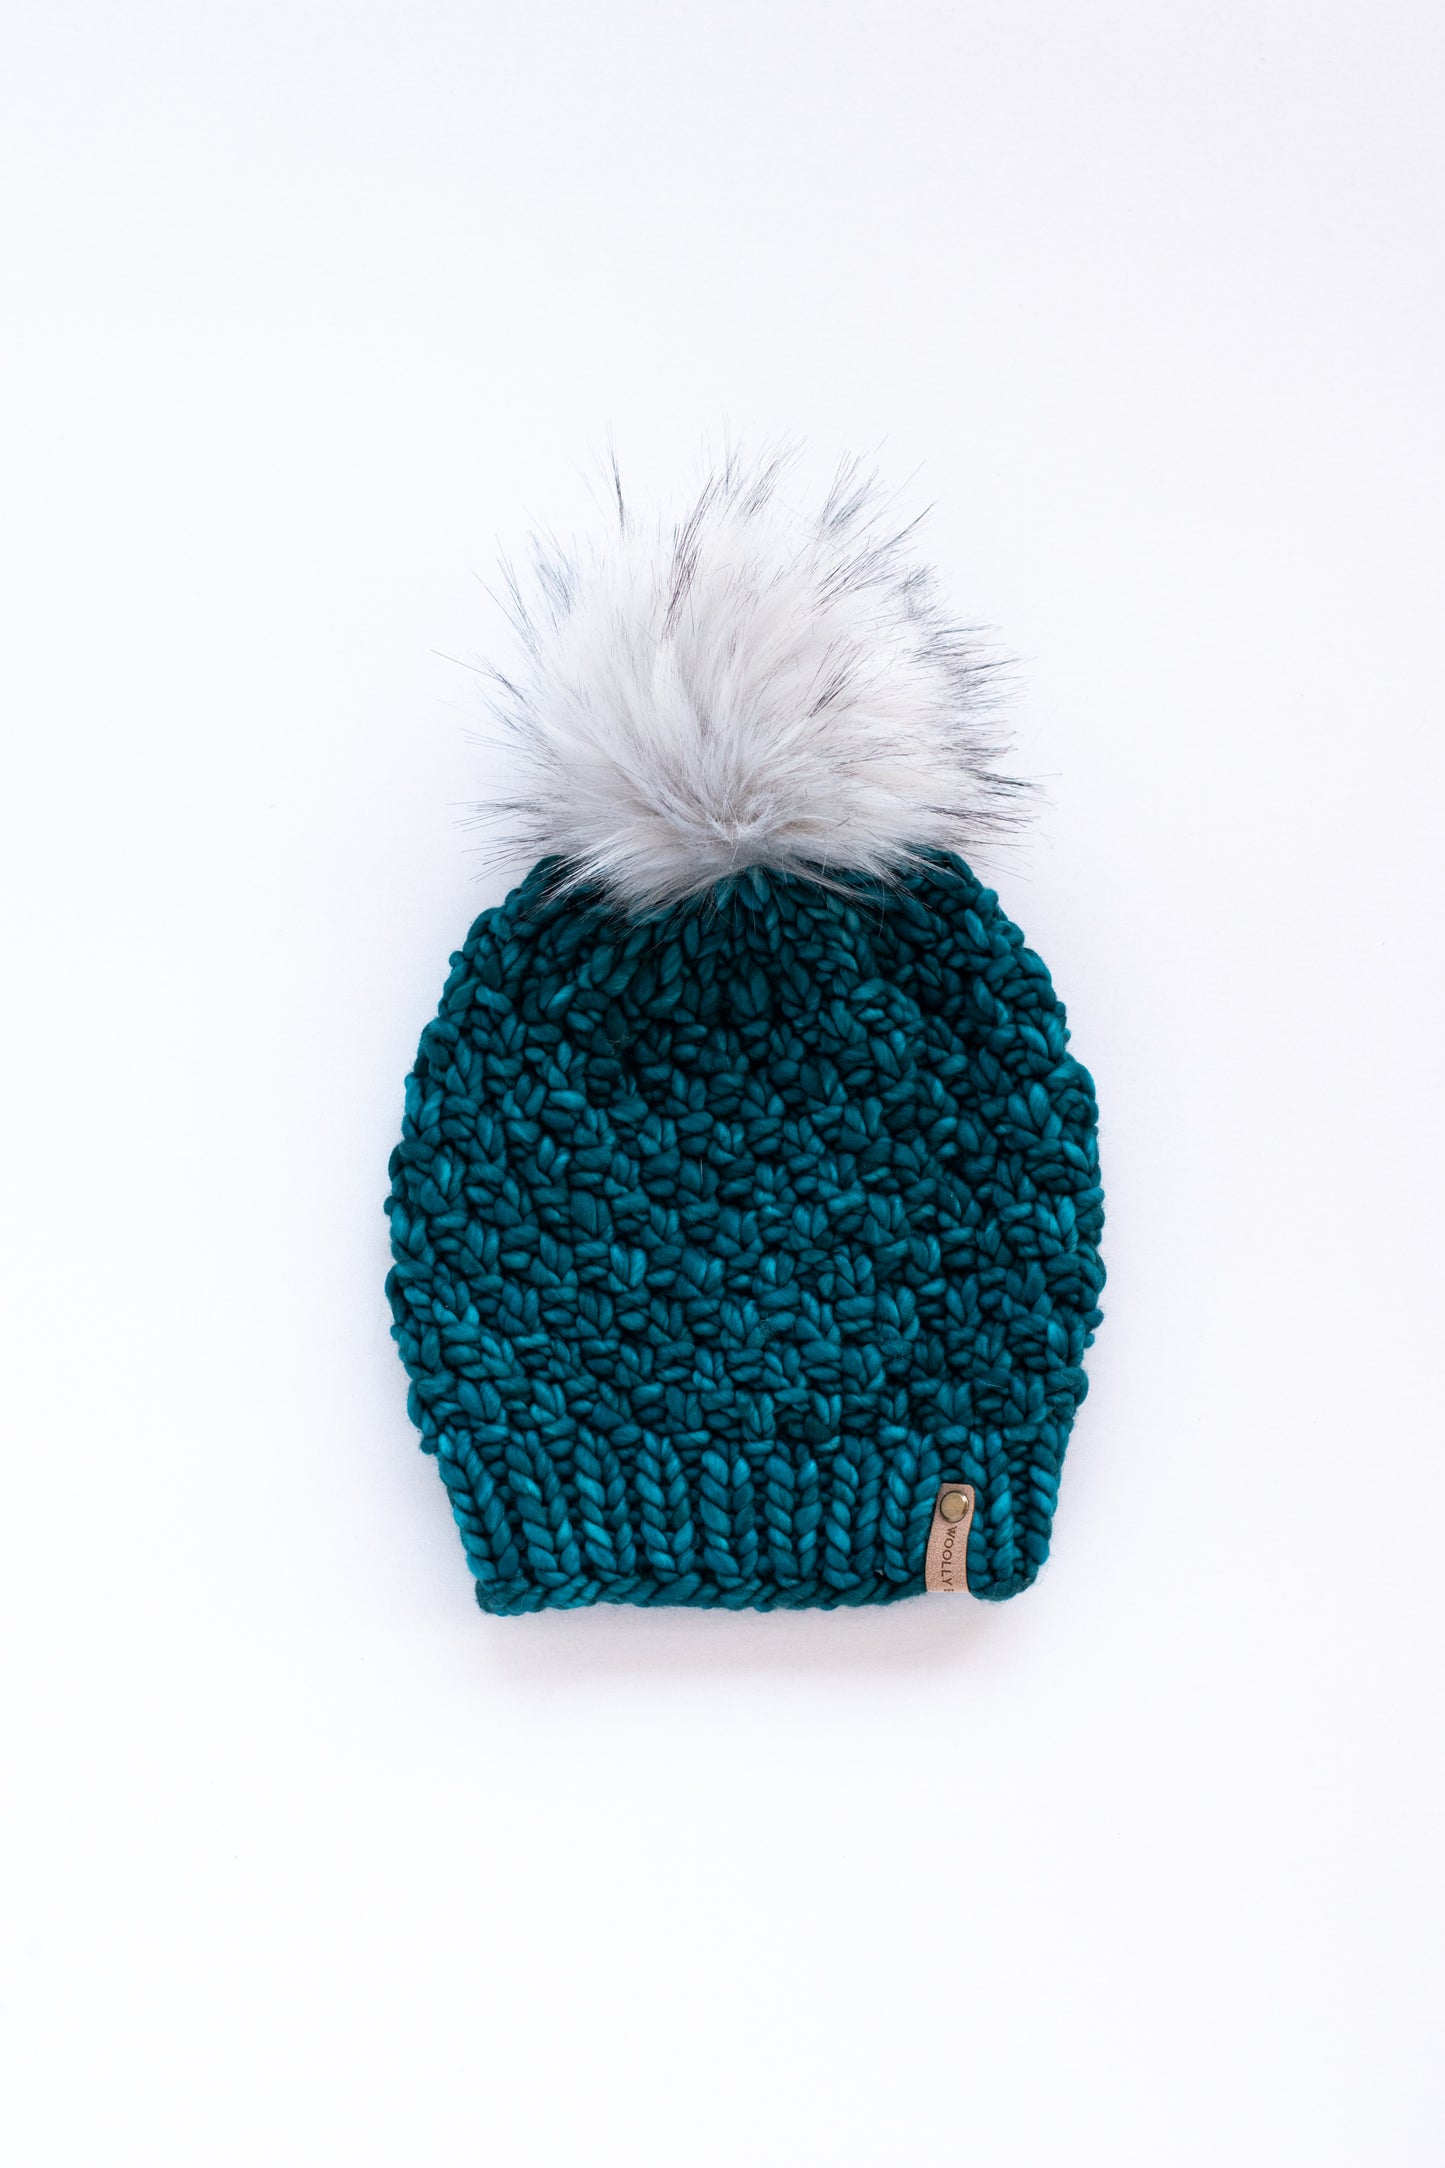 Teal Merino Wool Knit Hat with Faux Fur Pom Pom